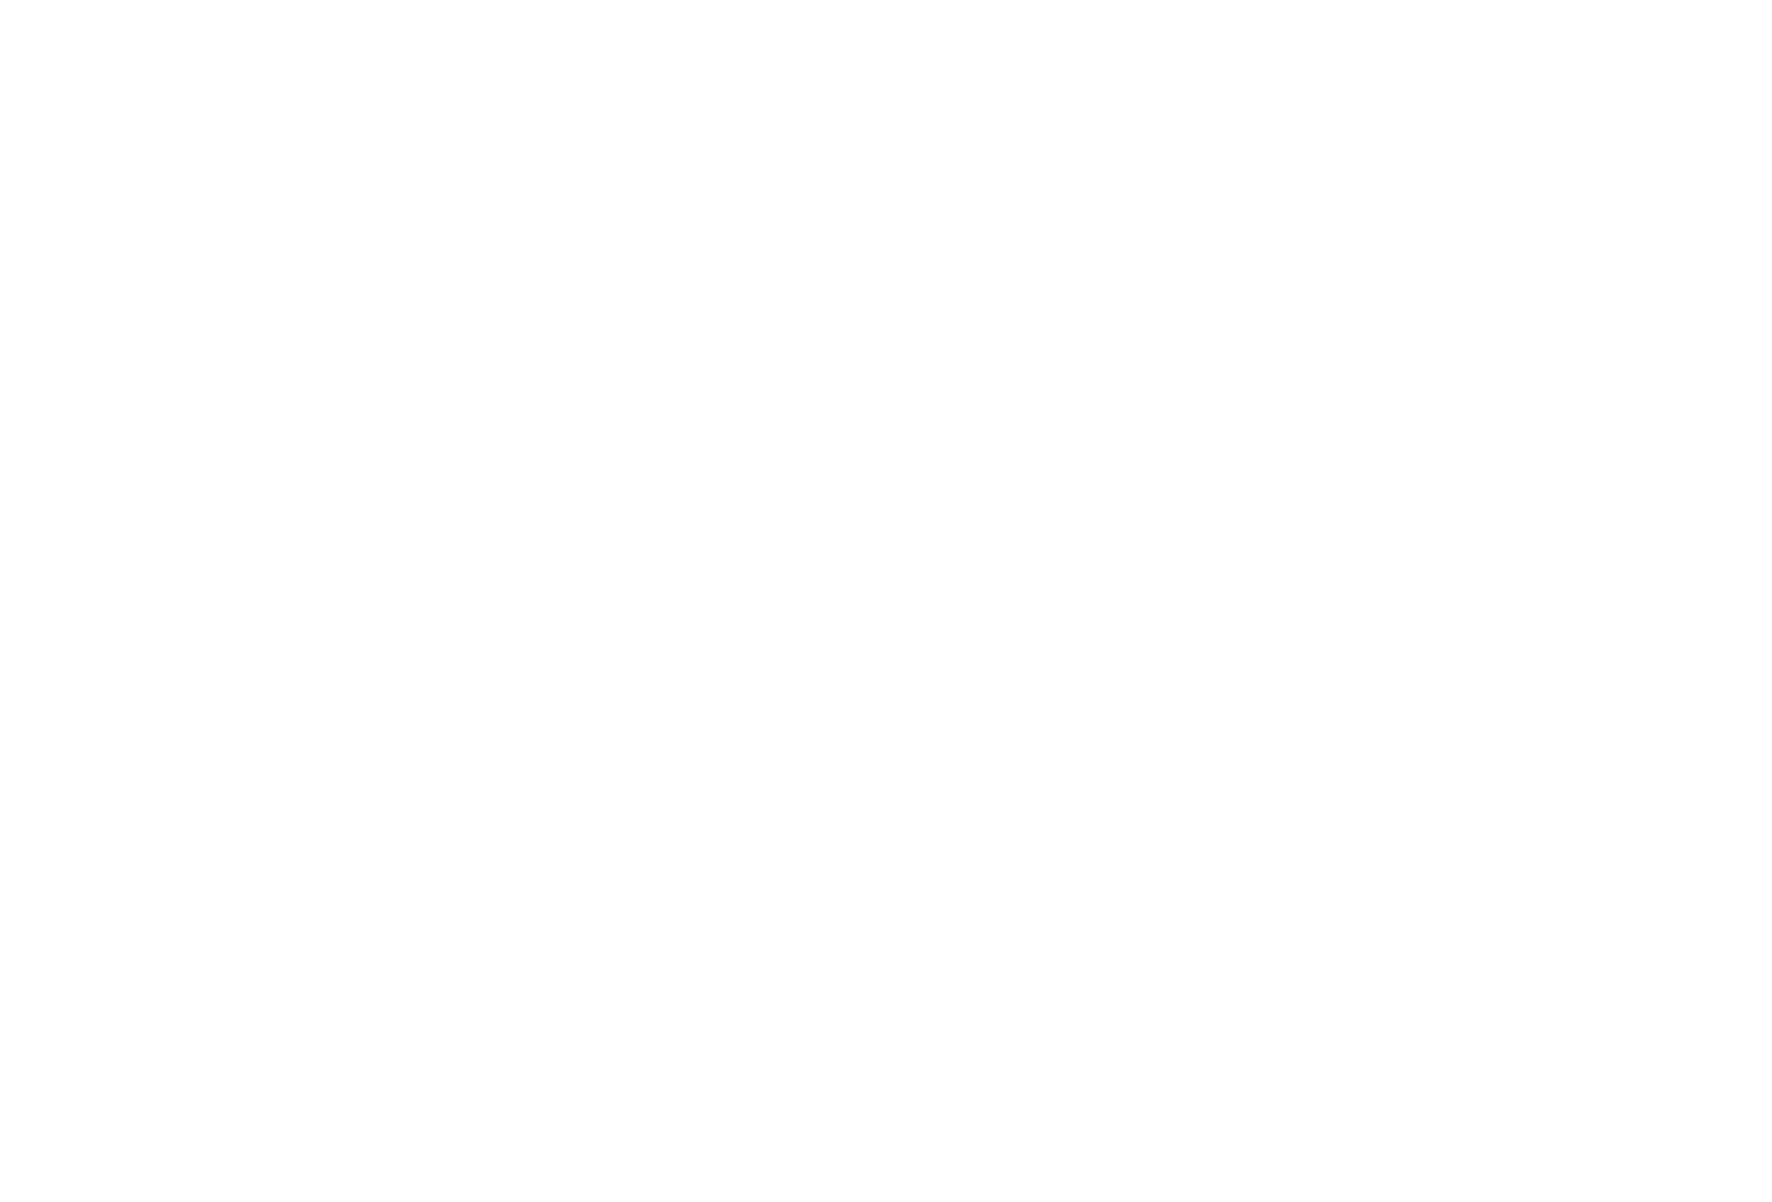 Burch Technologies